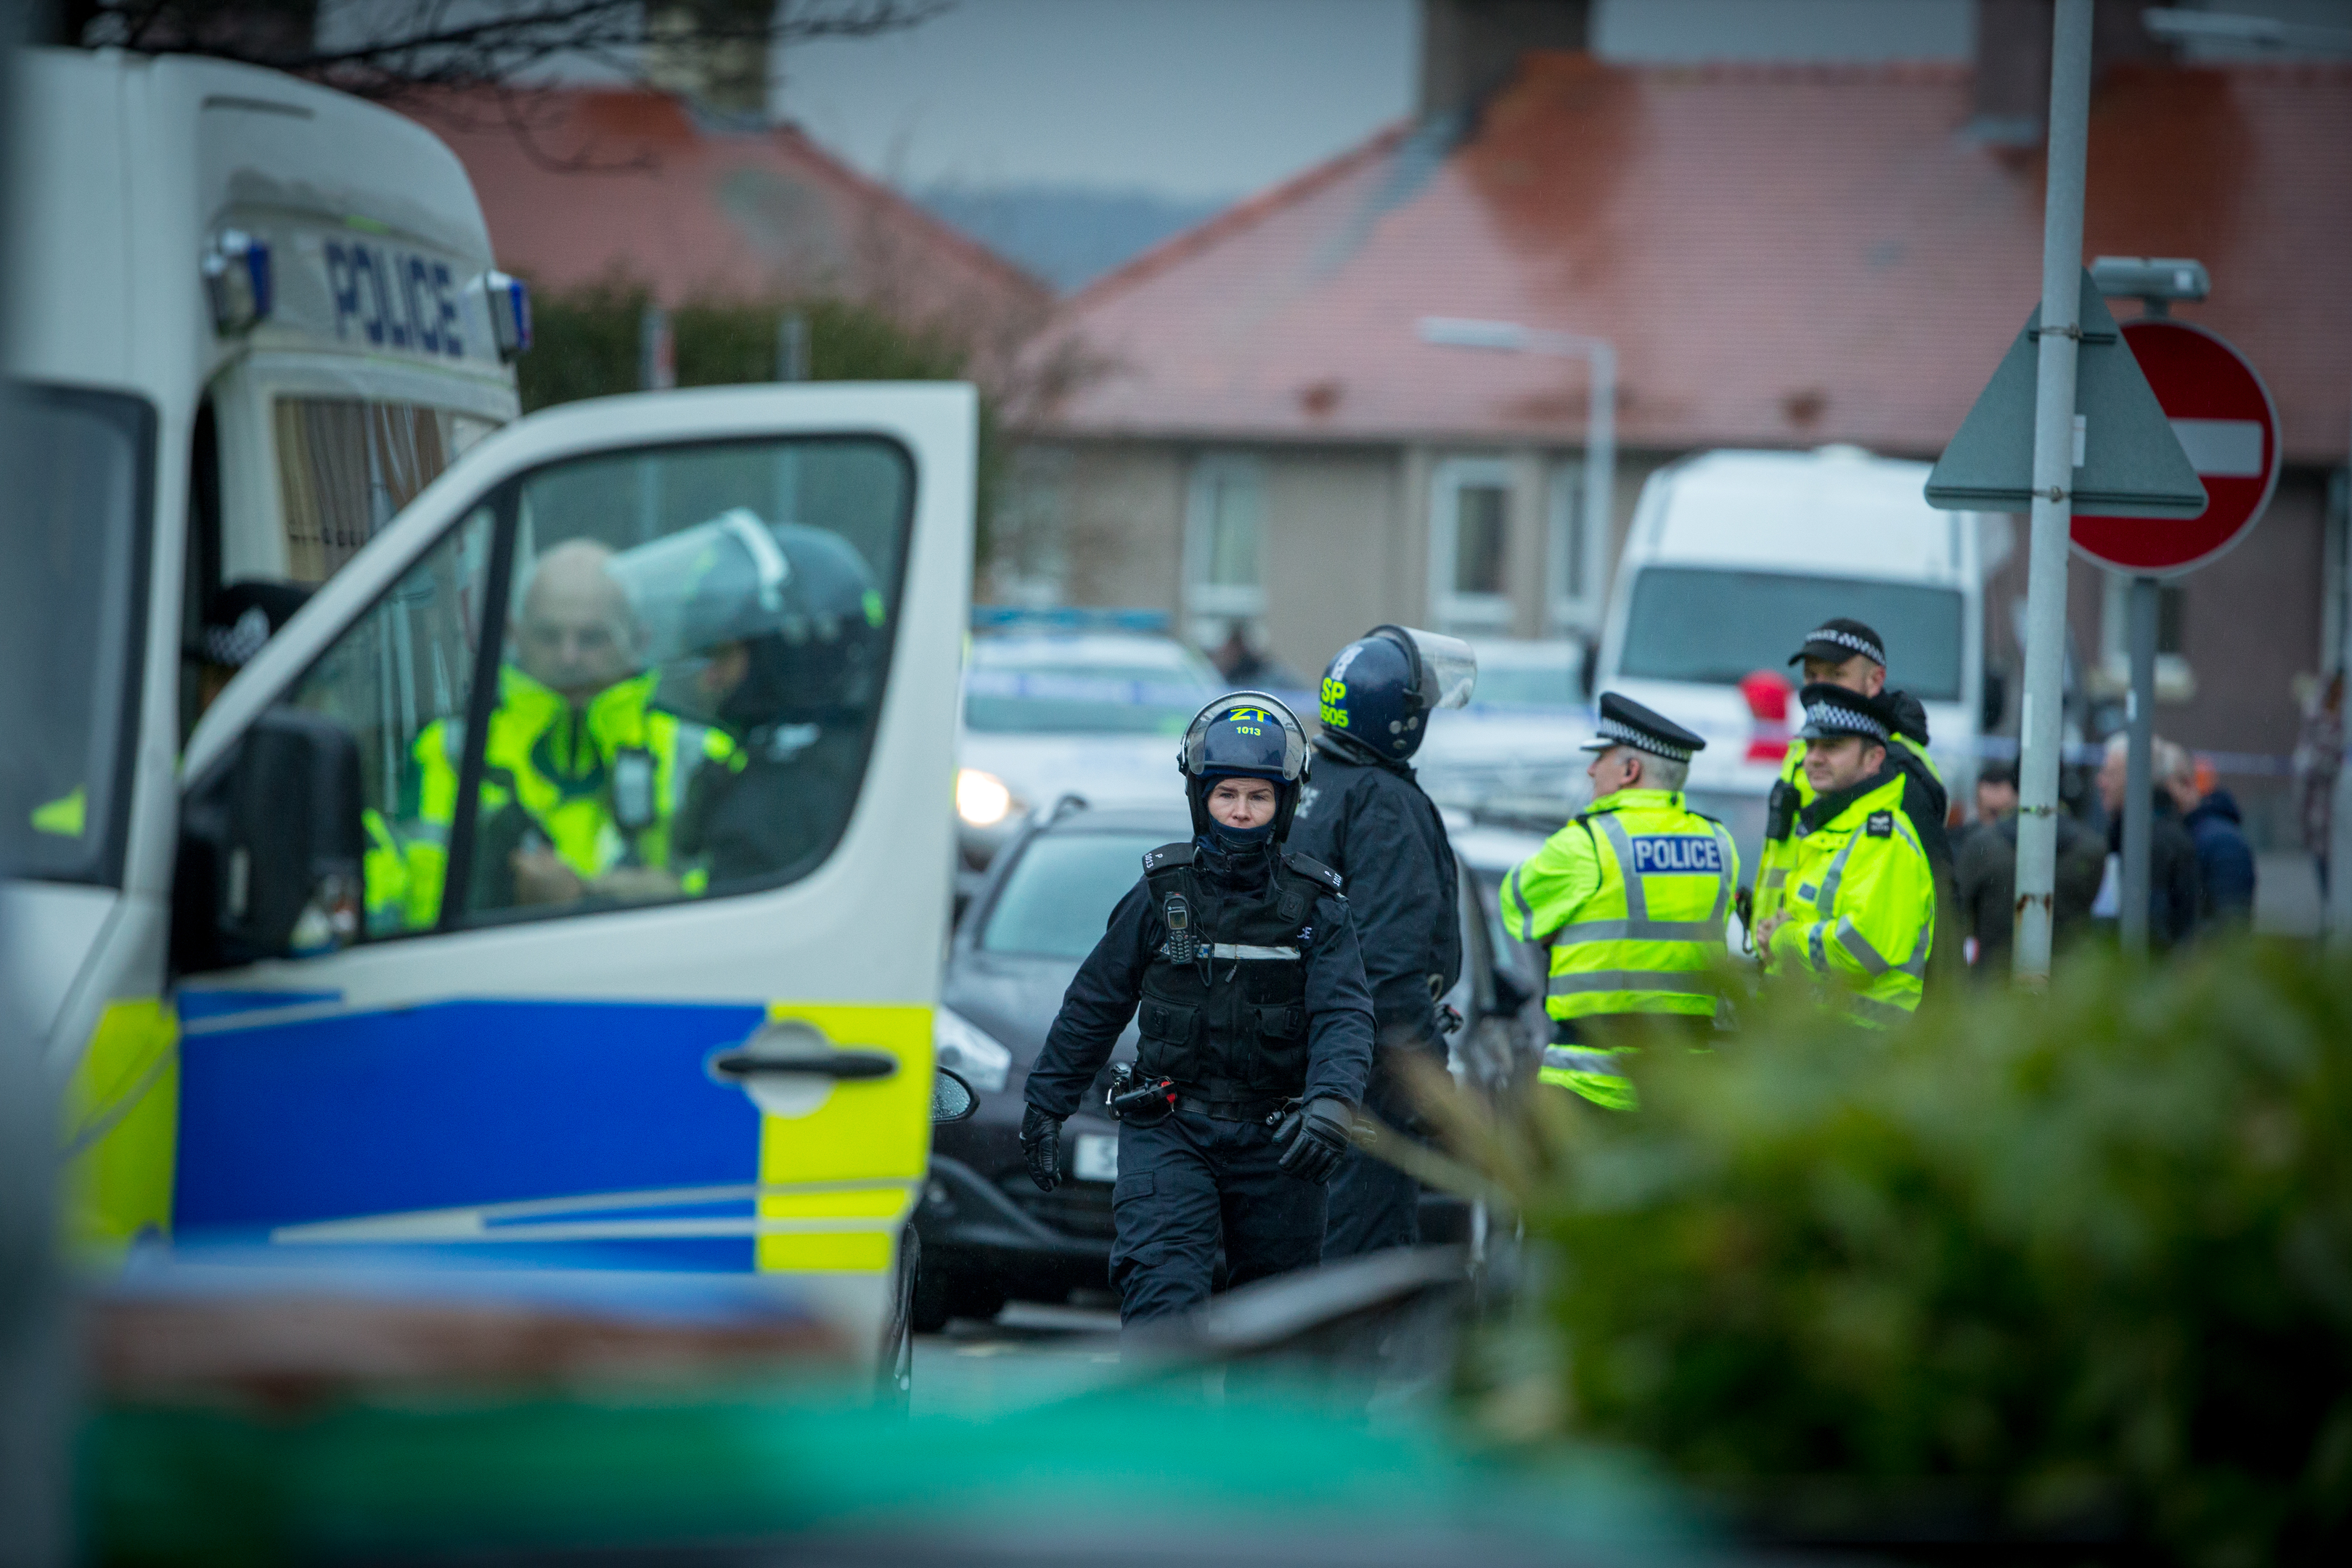 The police incident in Burntisland.